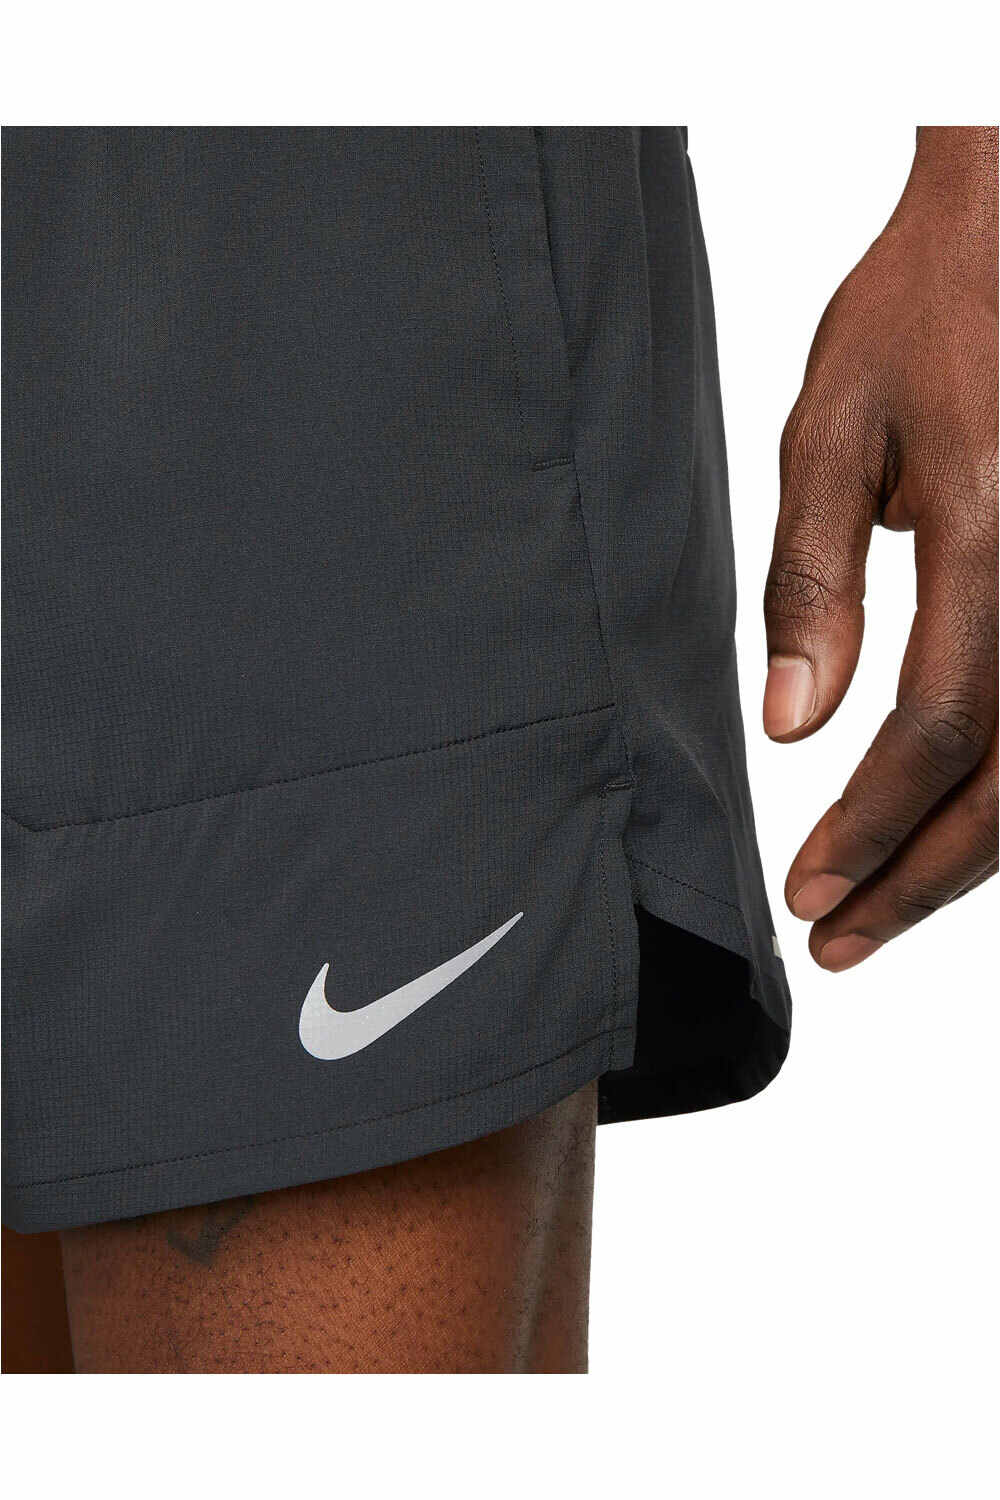 Nike pantaloneta técnica hombre M NK DF STRIDE 5IN BF SHRT vista detalle